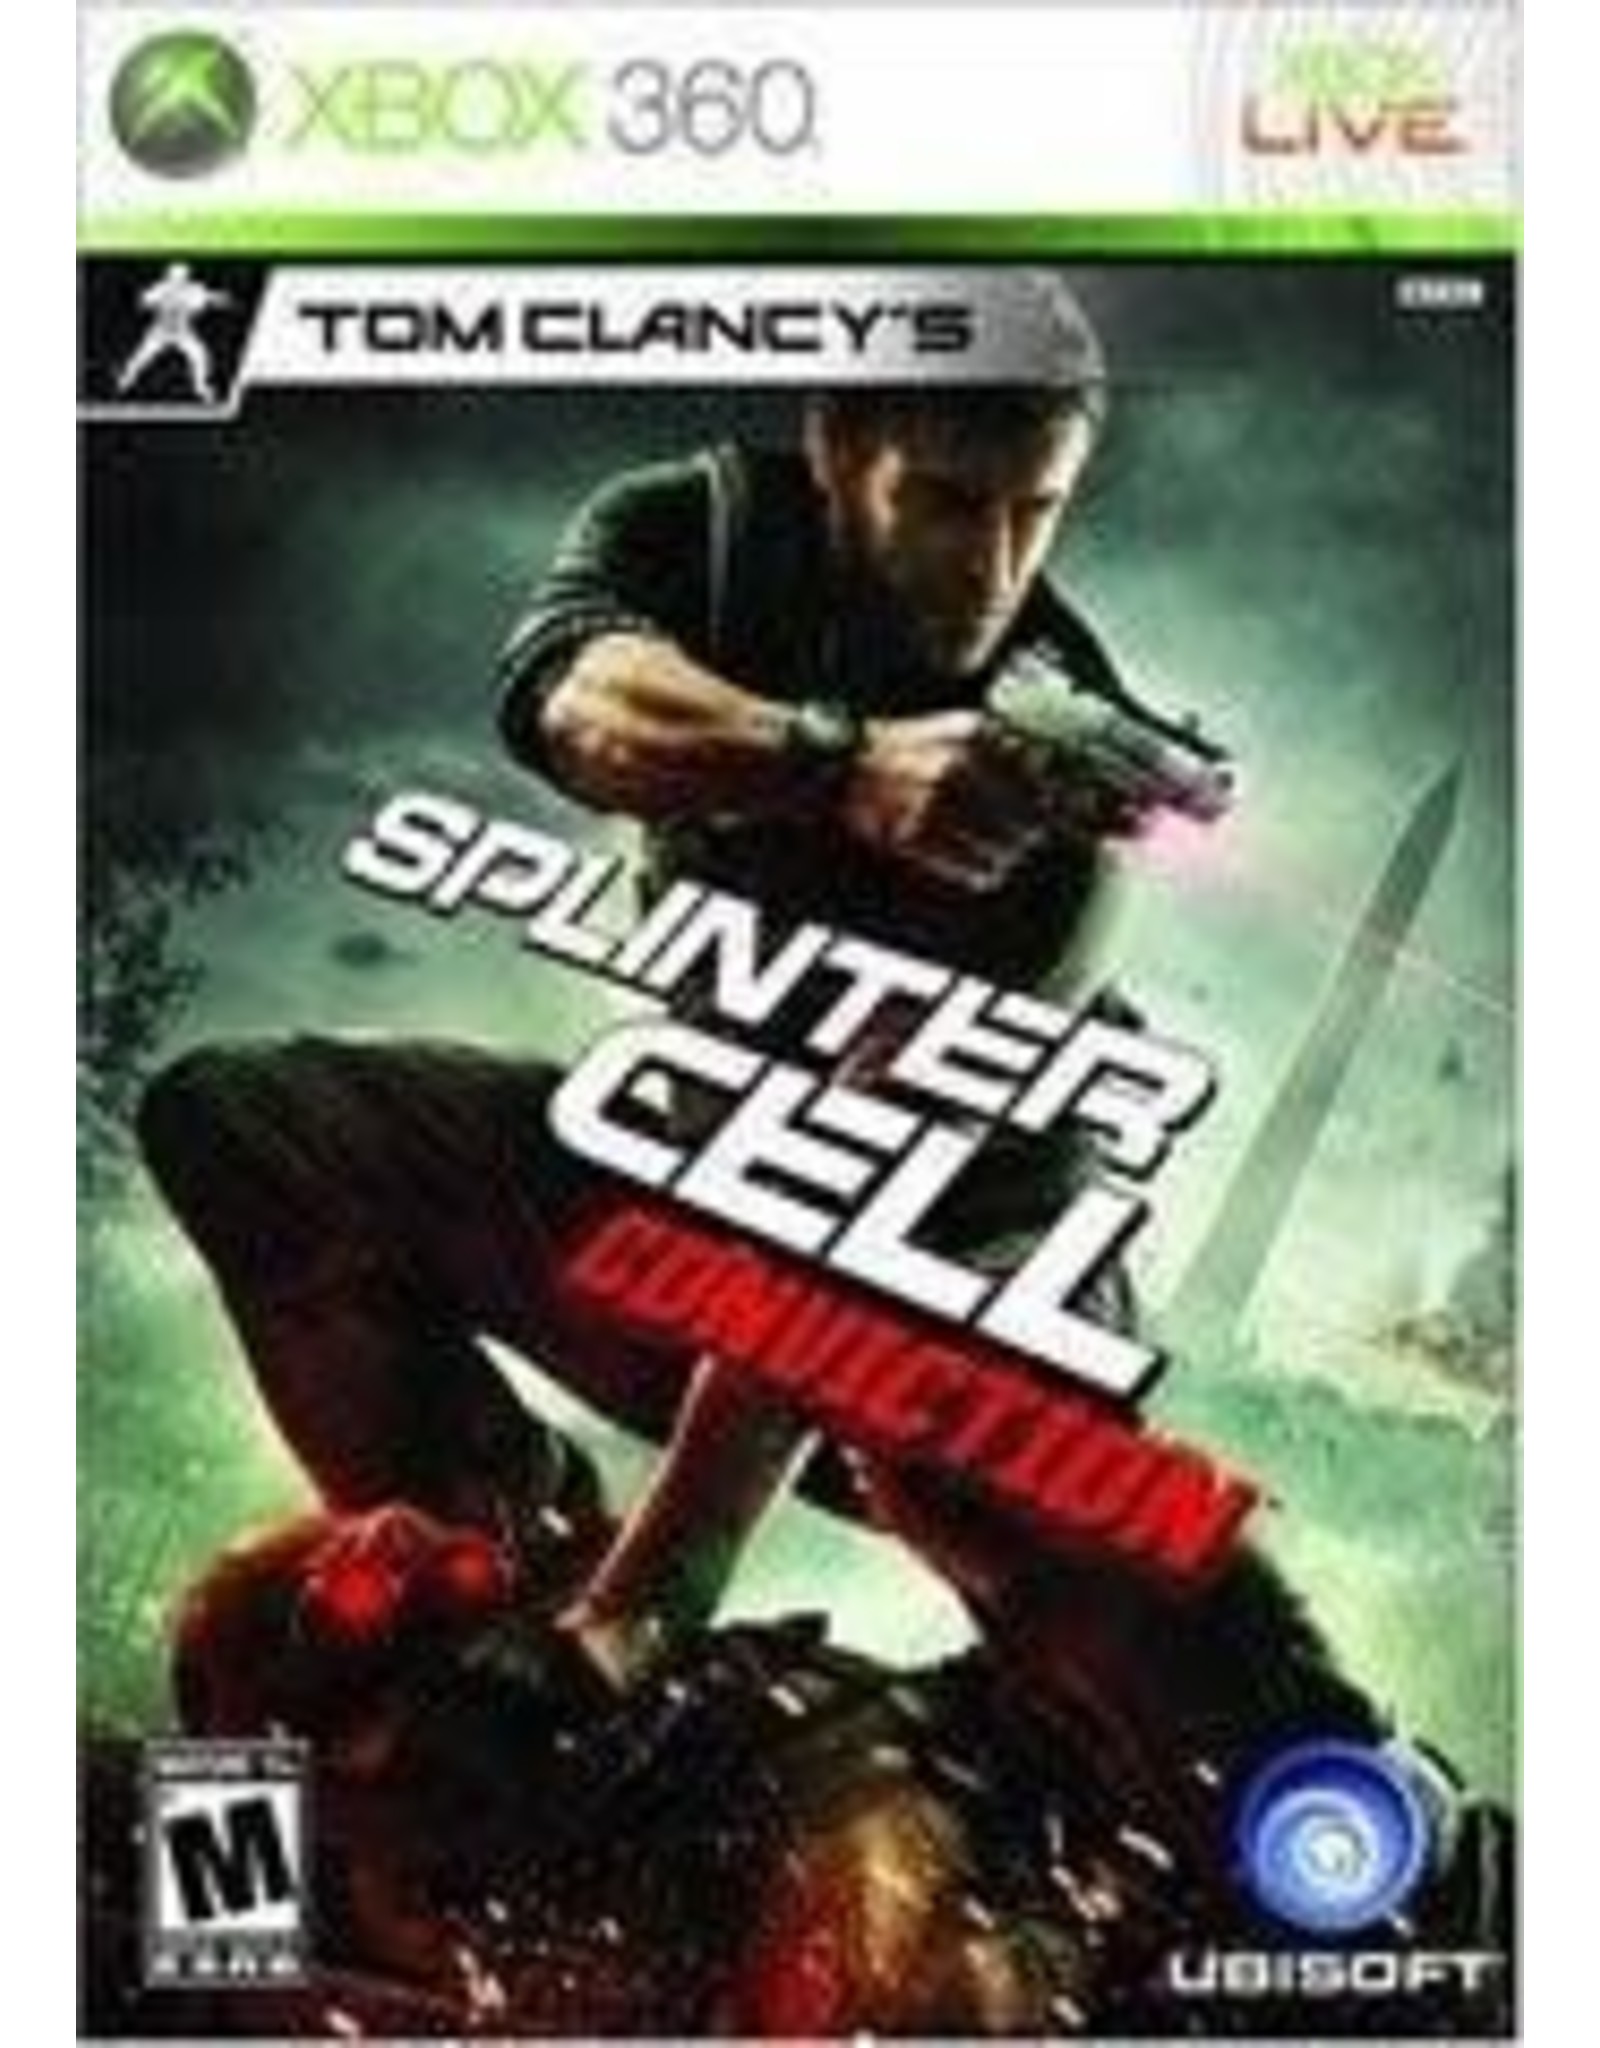 Xbox 360 Splinter Cell: Conviction (Used)